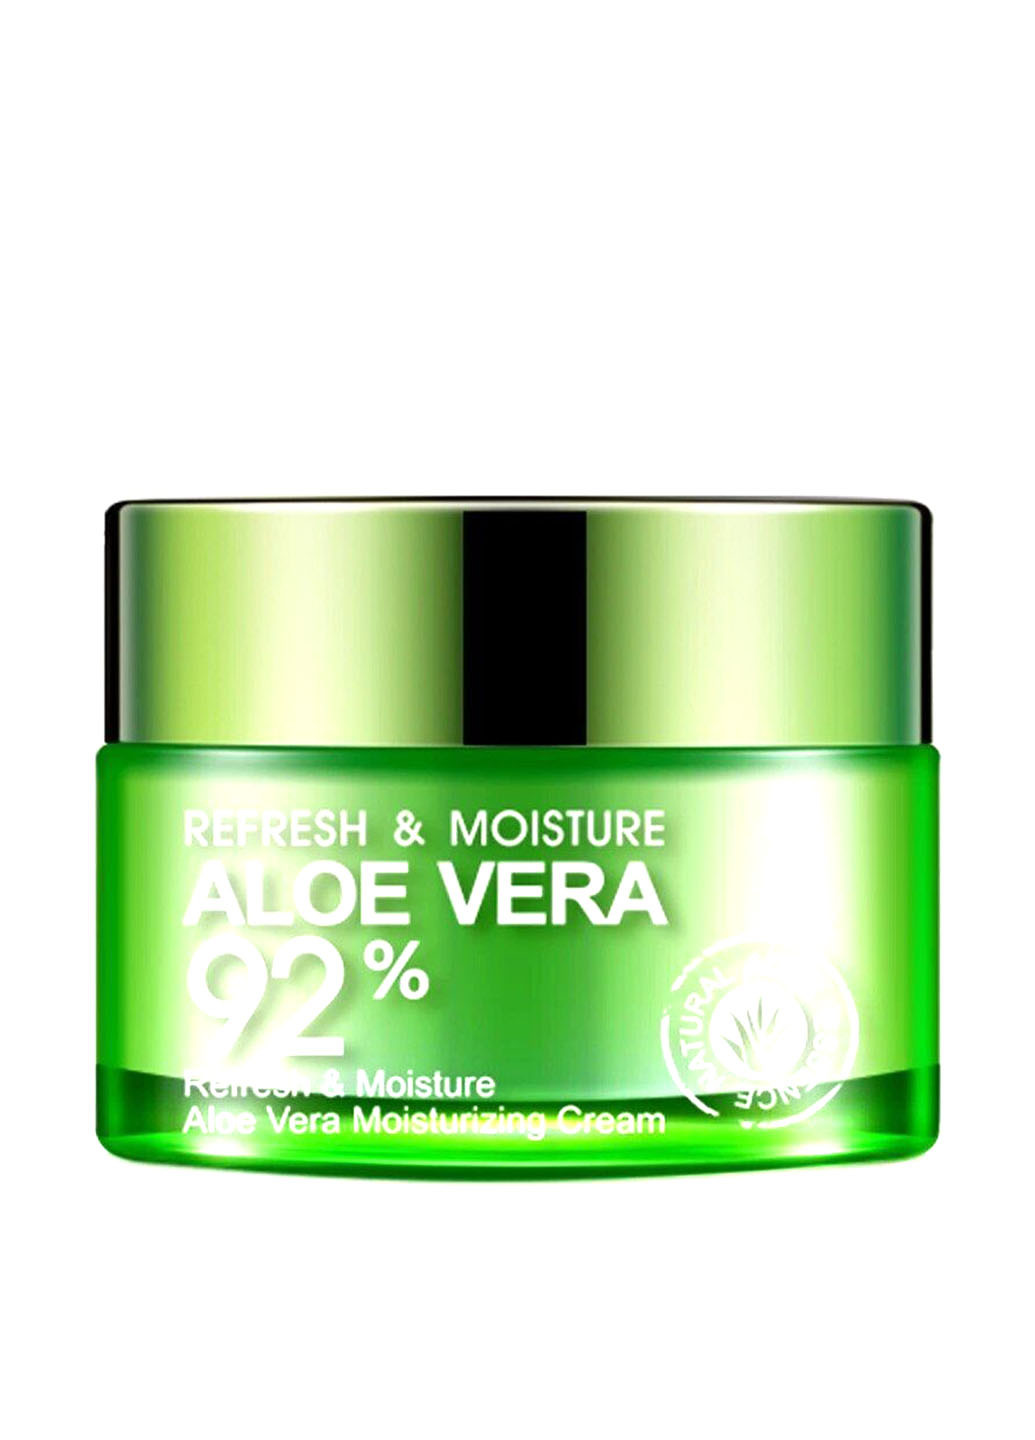 Крем Aloe Vera Moisturizing Cream 92% Refresh and Moisture, 50 г Bioaqua (183441822)